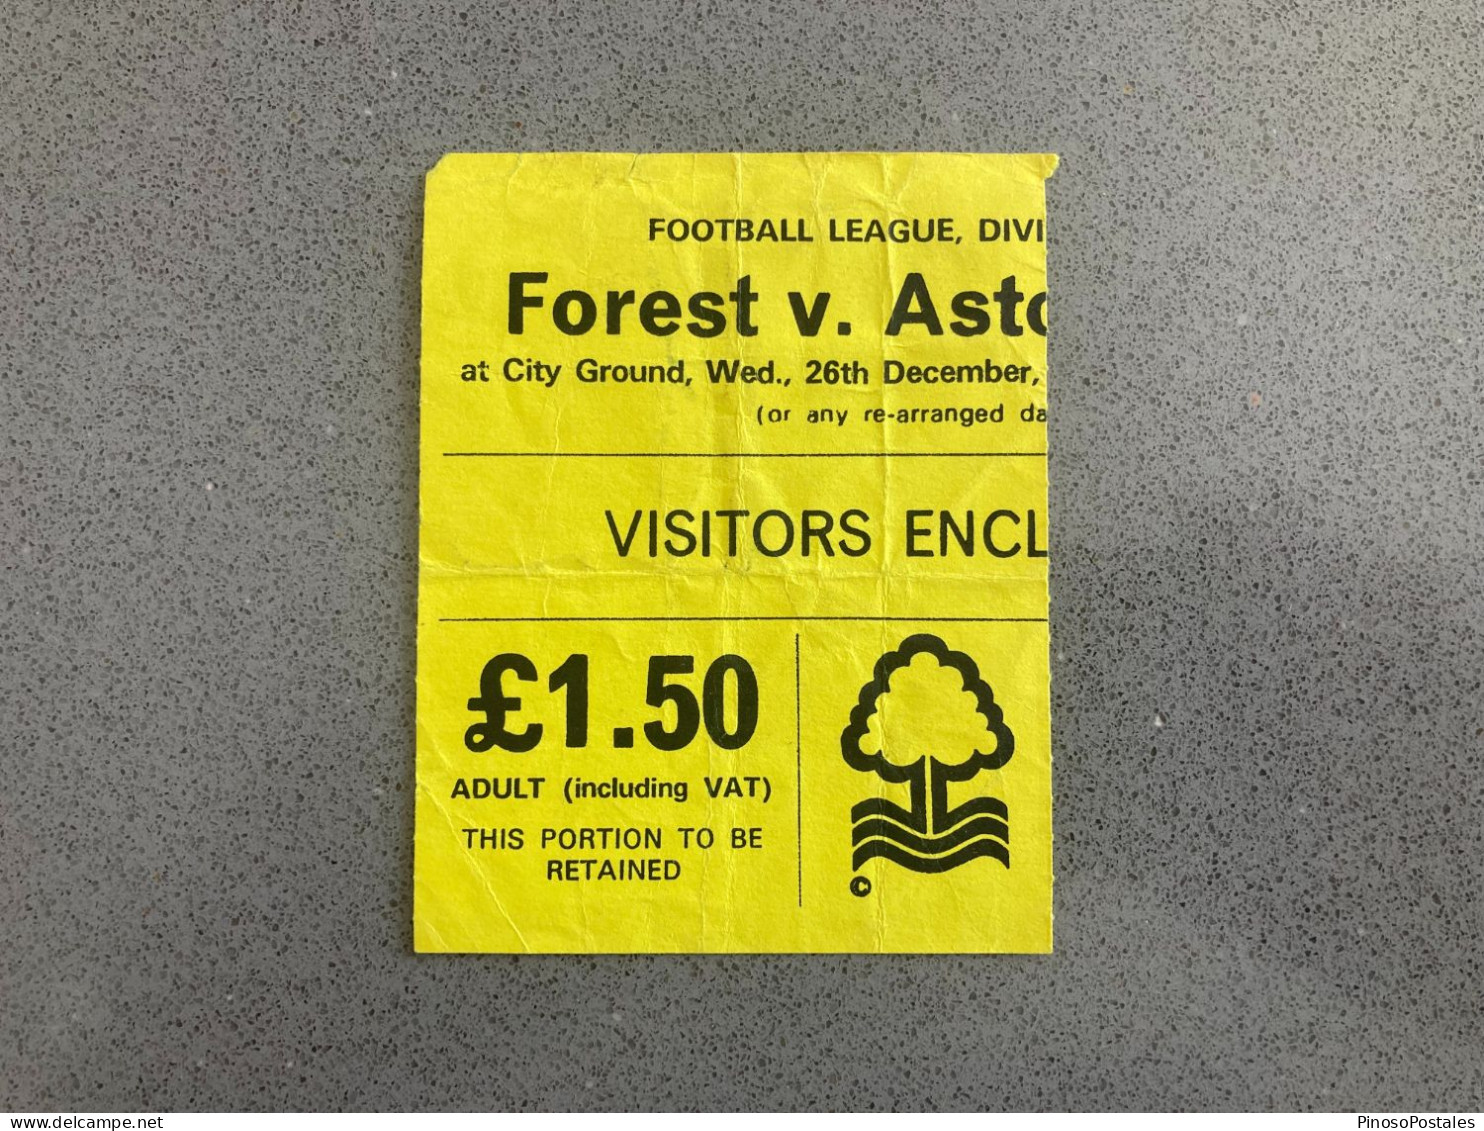 Nottingham Forest V Aston Villa 1979-80 Match Ticket - Eintrittskarten